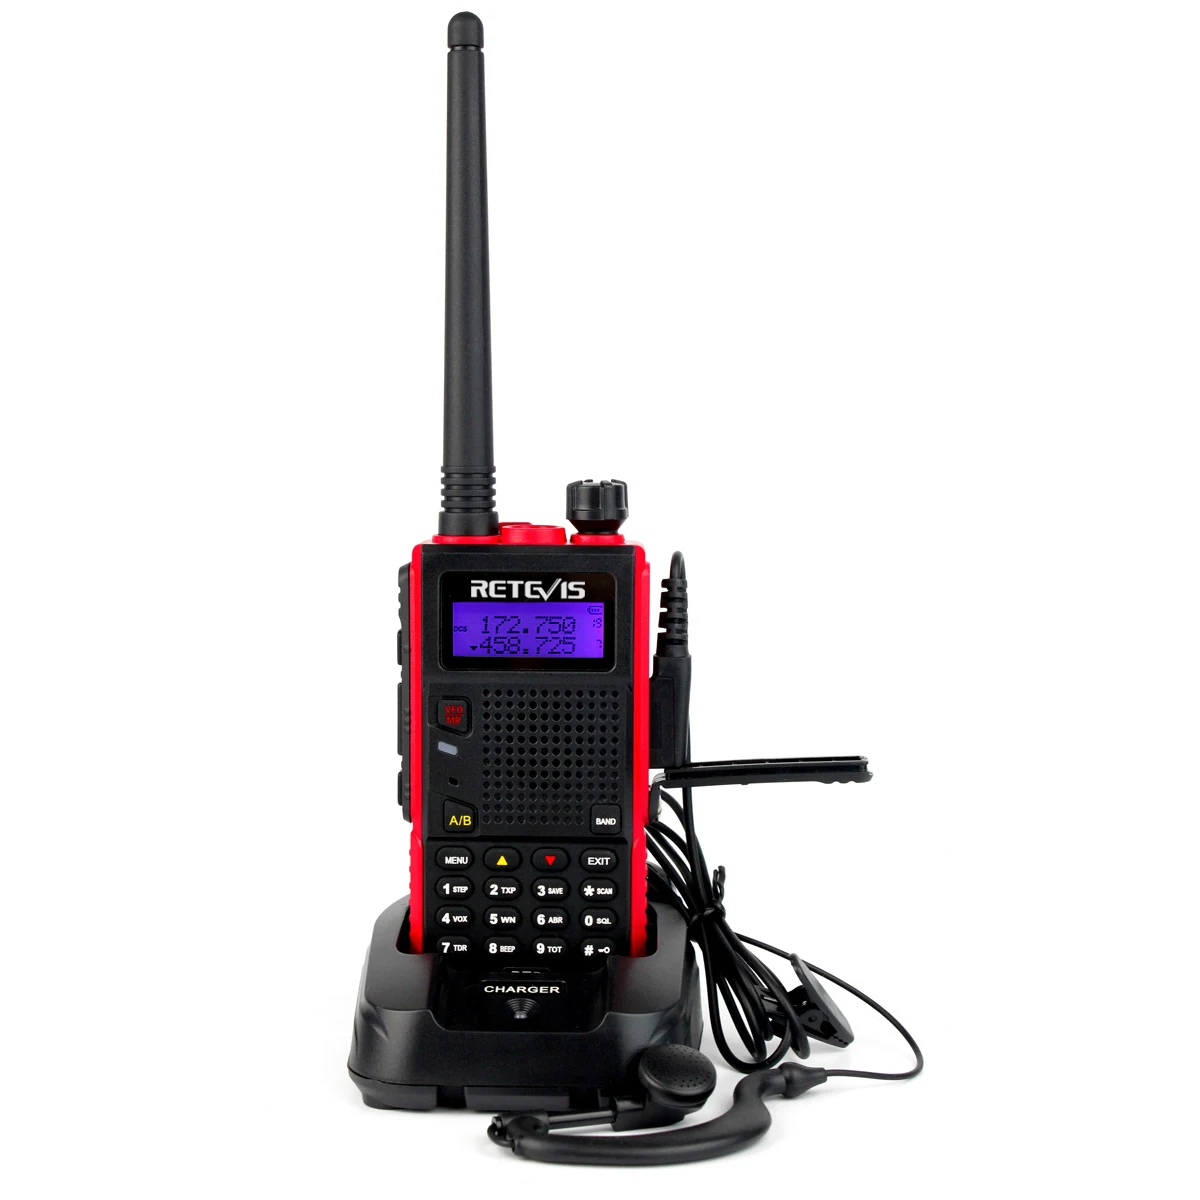 

Retevis RT5 Walkie Talkie 7W 128CH Dual Band VHF UHF VOX FM Radio Scanner Amateur cb Ham Radio Communicator HF Transceiver